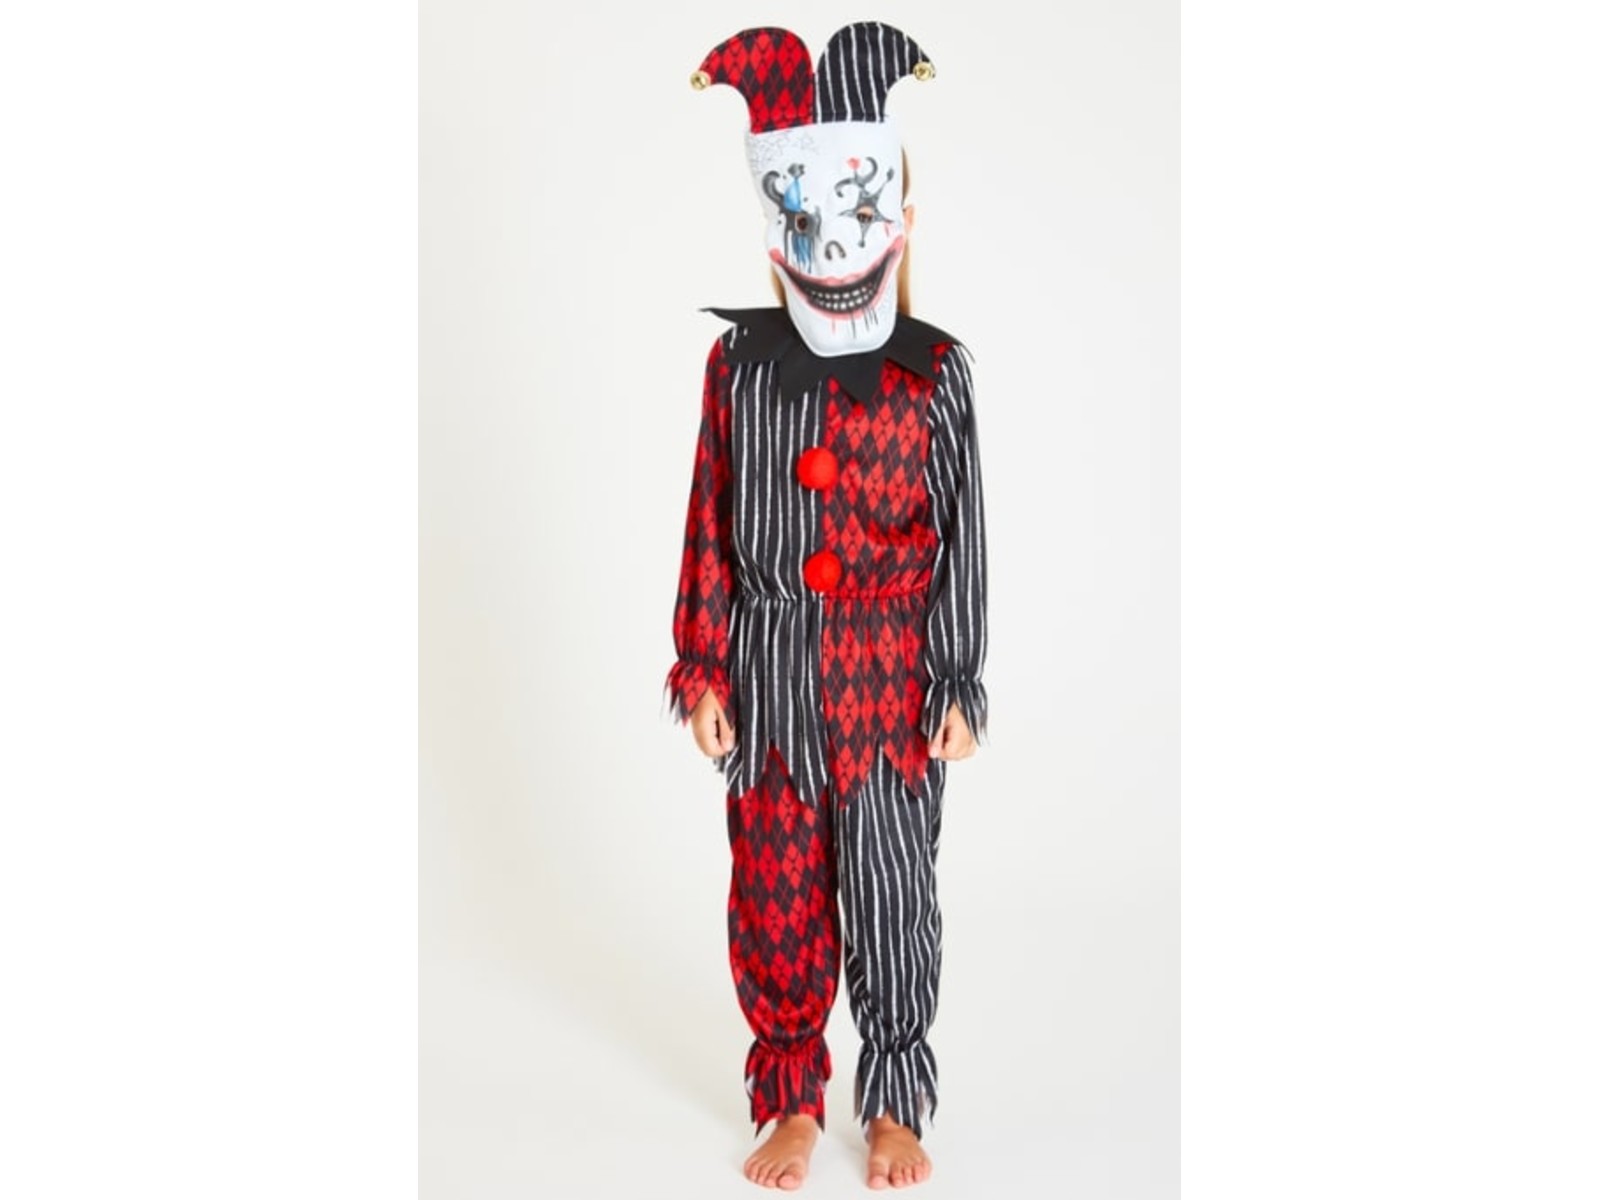 BNWT SAINSBURY'S TU vêtements Rembourré Spider enfant fantaisie robe Costume Halloween